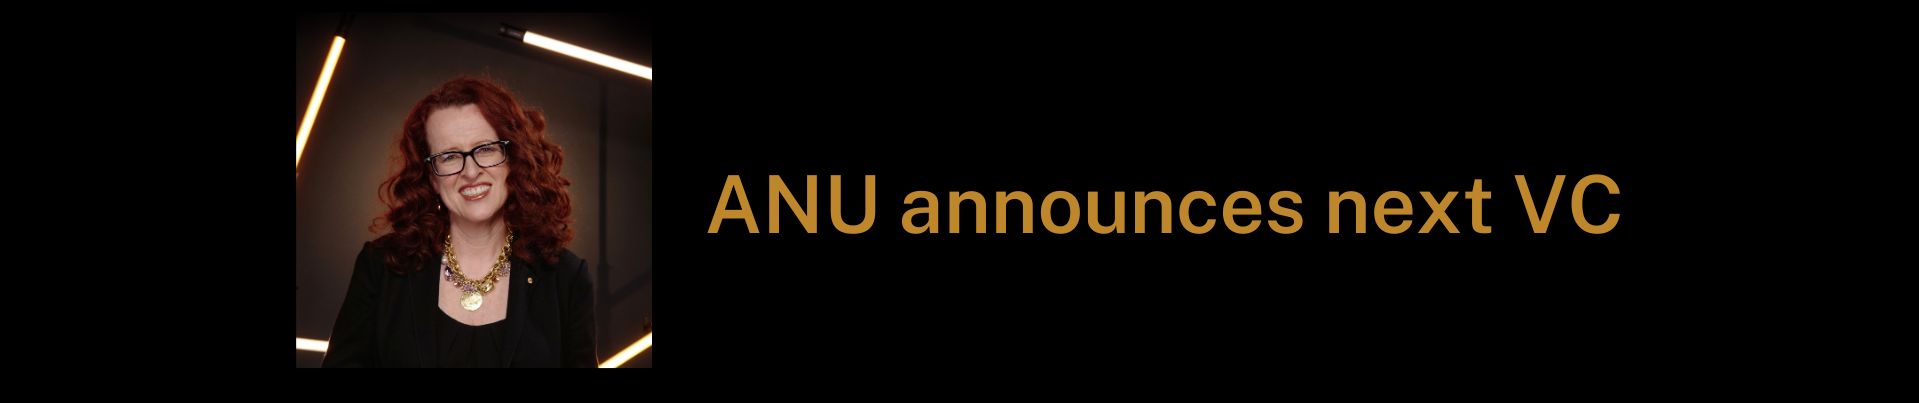 ANU announces new VC